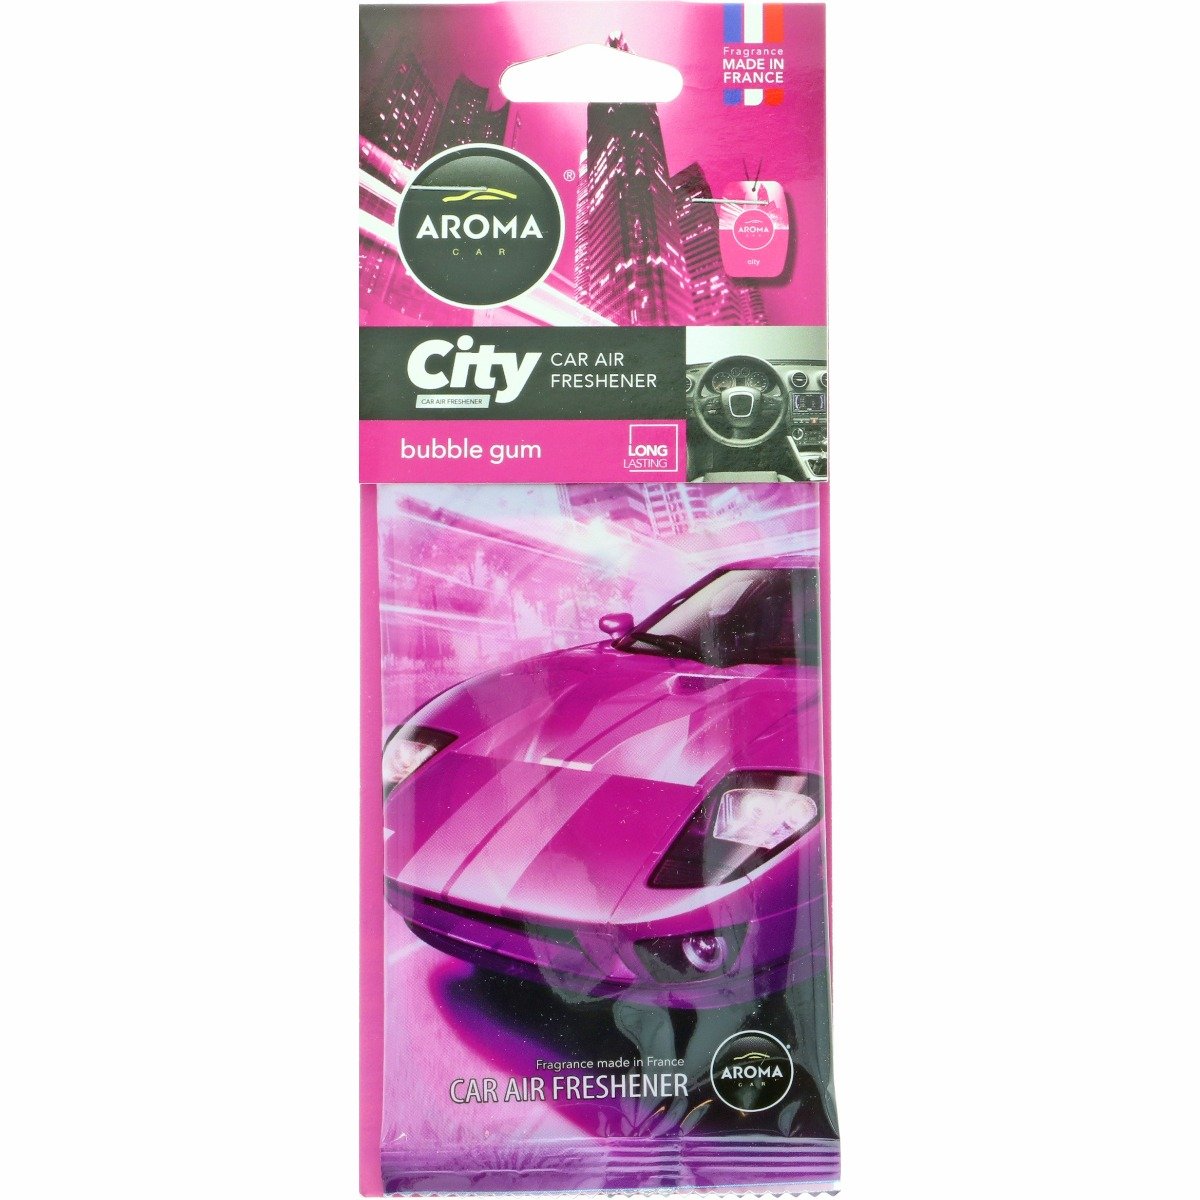 City Car Air Freshener - Bubble Gum